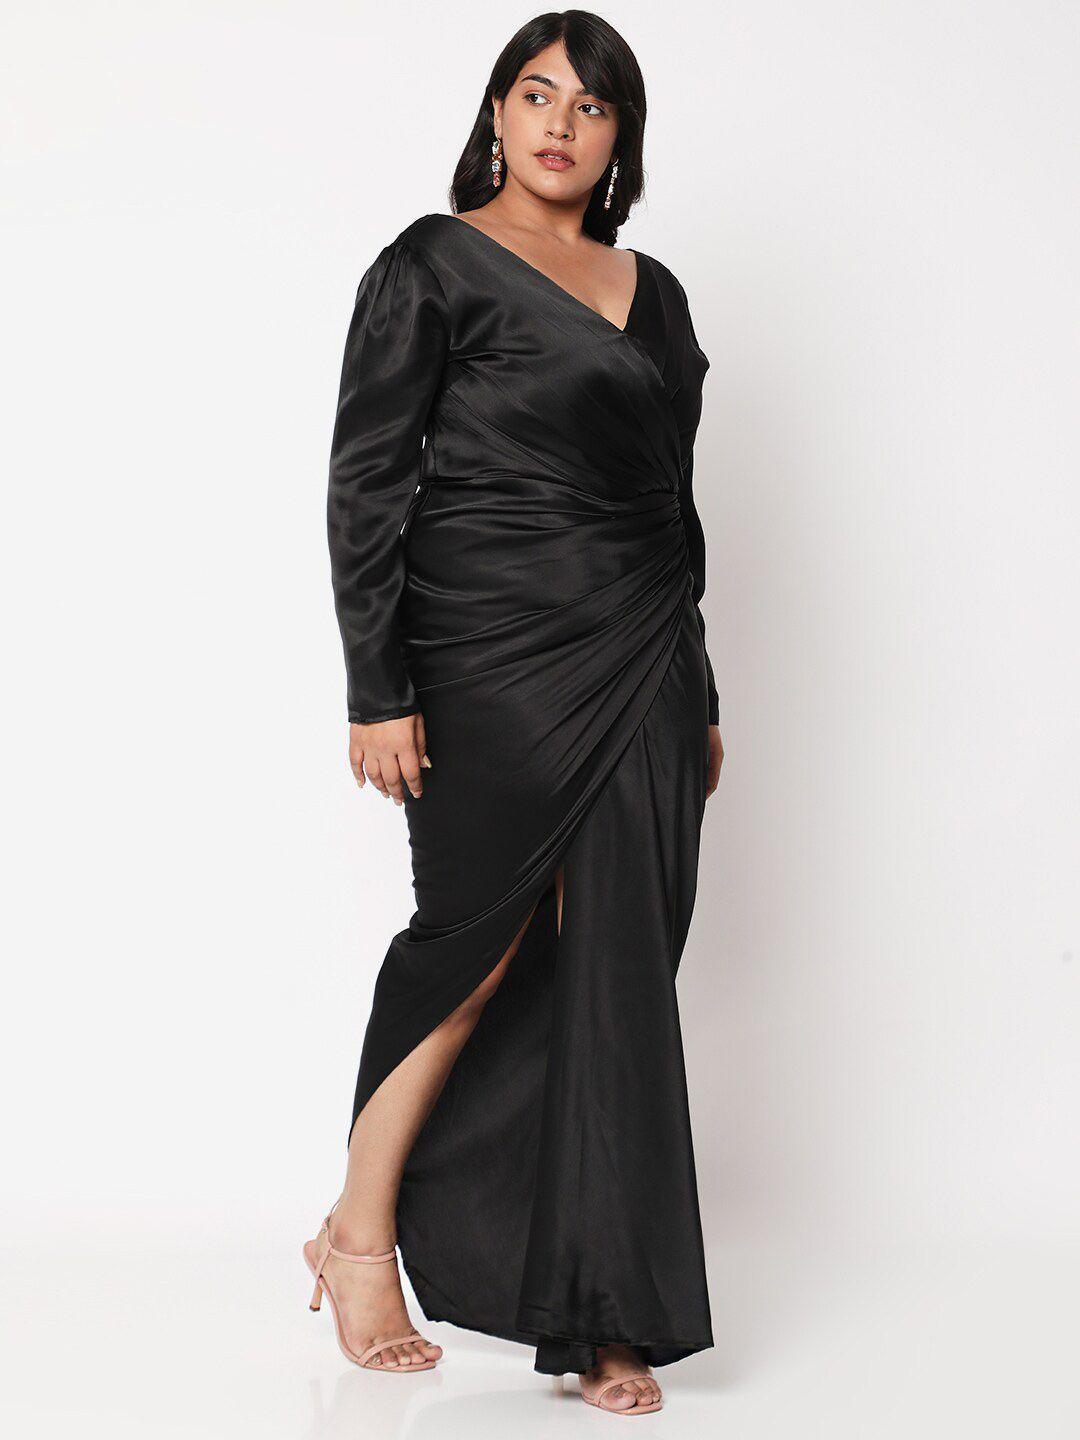 curves by mish black plus size maxi dress